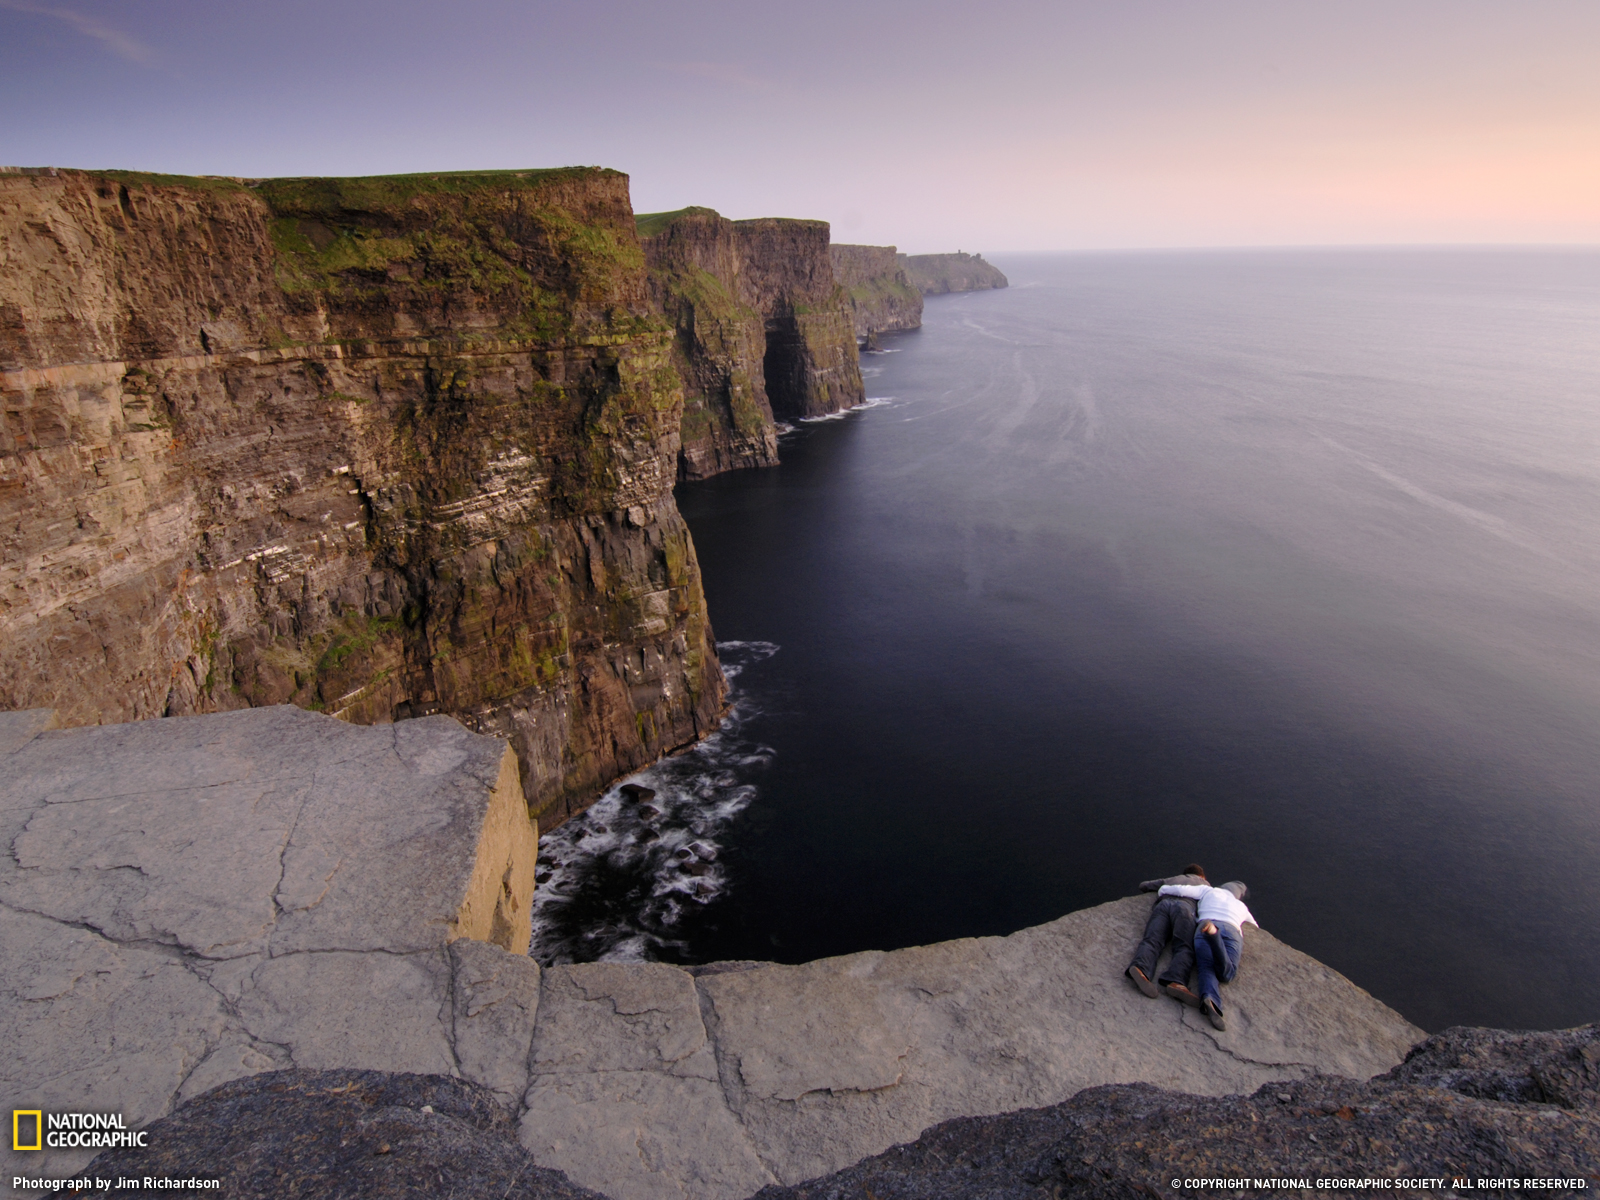 Cliffs Of Moher Ireland